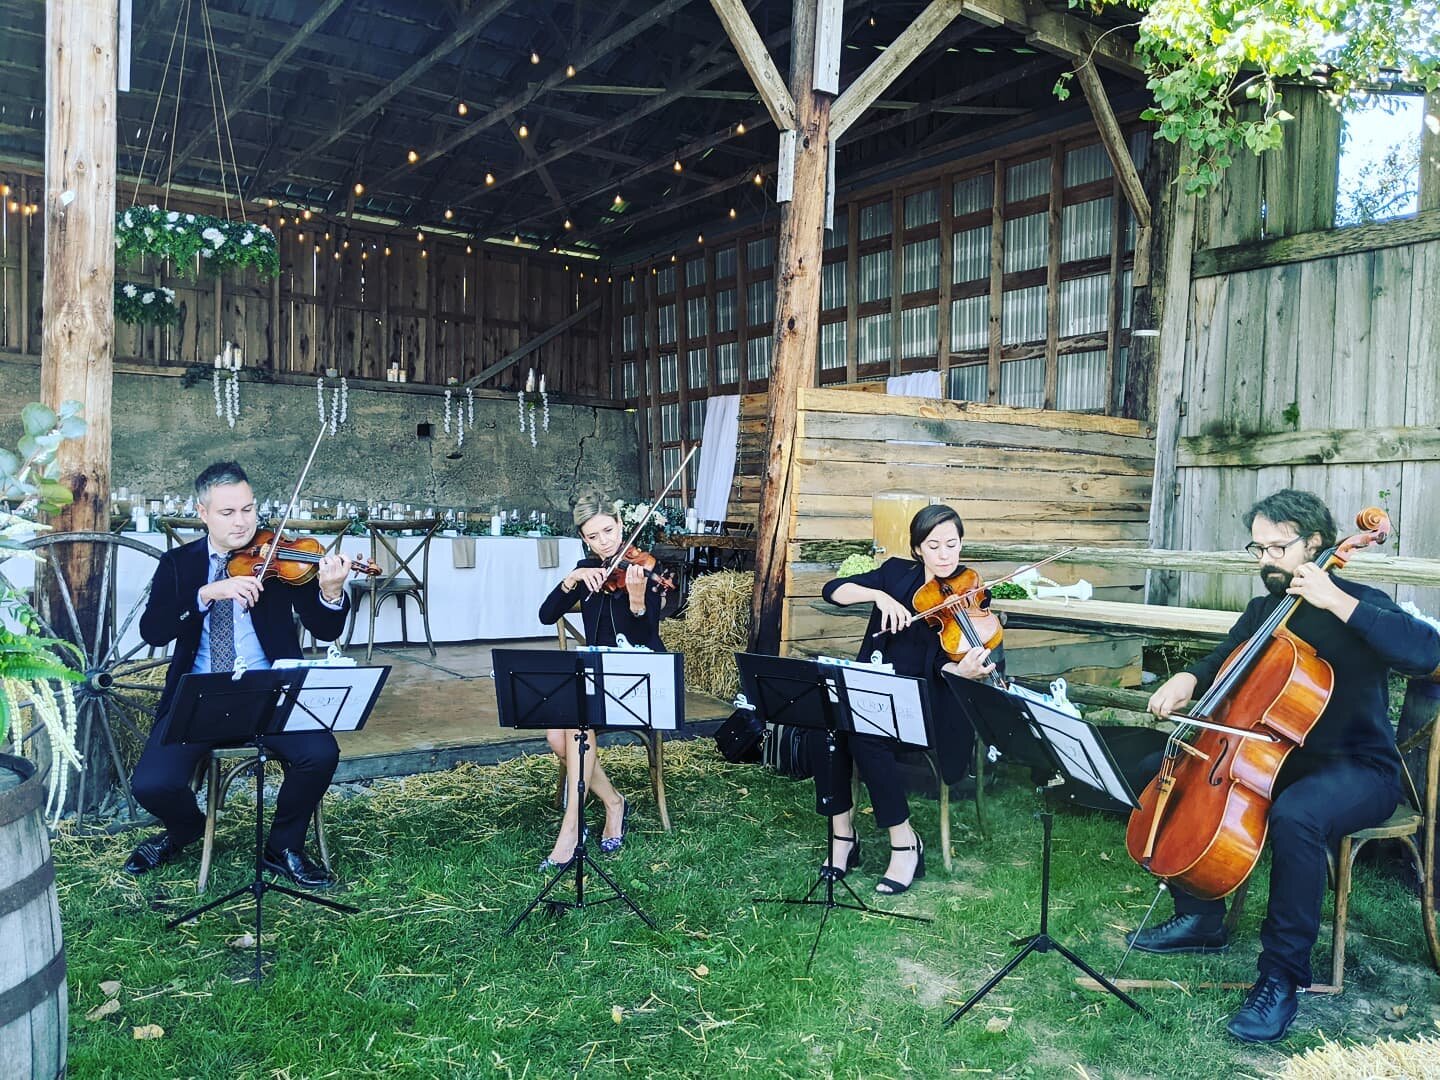 Precious wedding 💒 in the countryside 🌽
.
.
#easterntownships #quebec #quartet #weddingmusic #violin #cello 
.
@elglorieux @julienneglorieux  @juliejboivin @lozowskialex